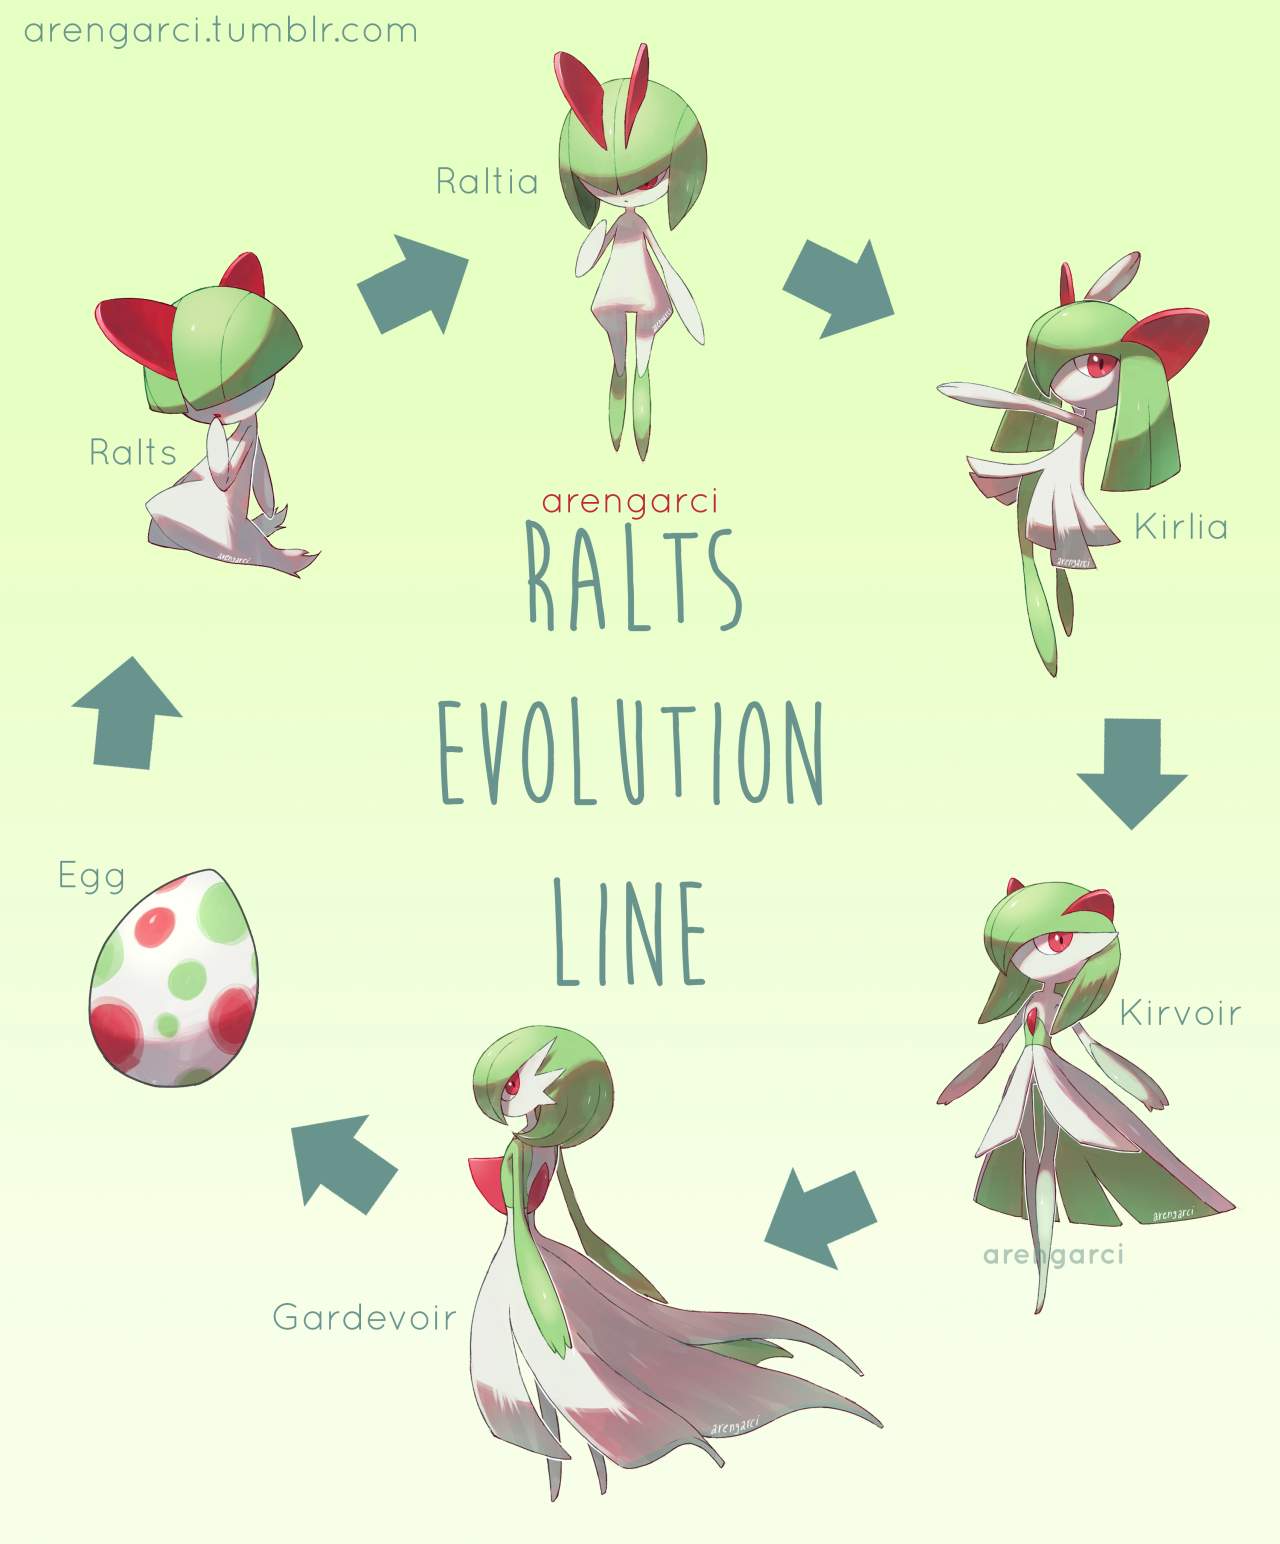 Ralts evolution tree